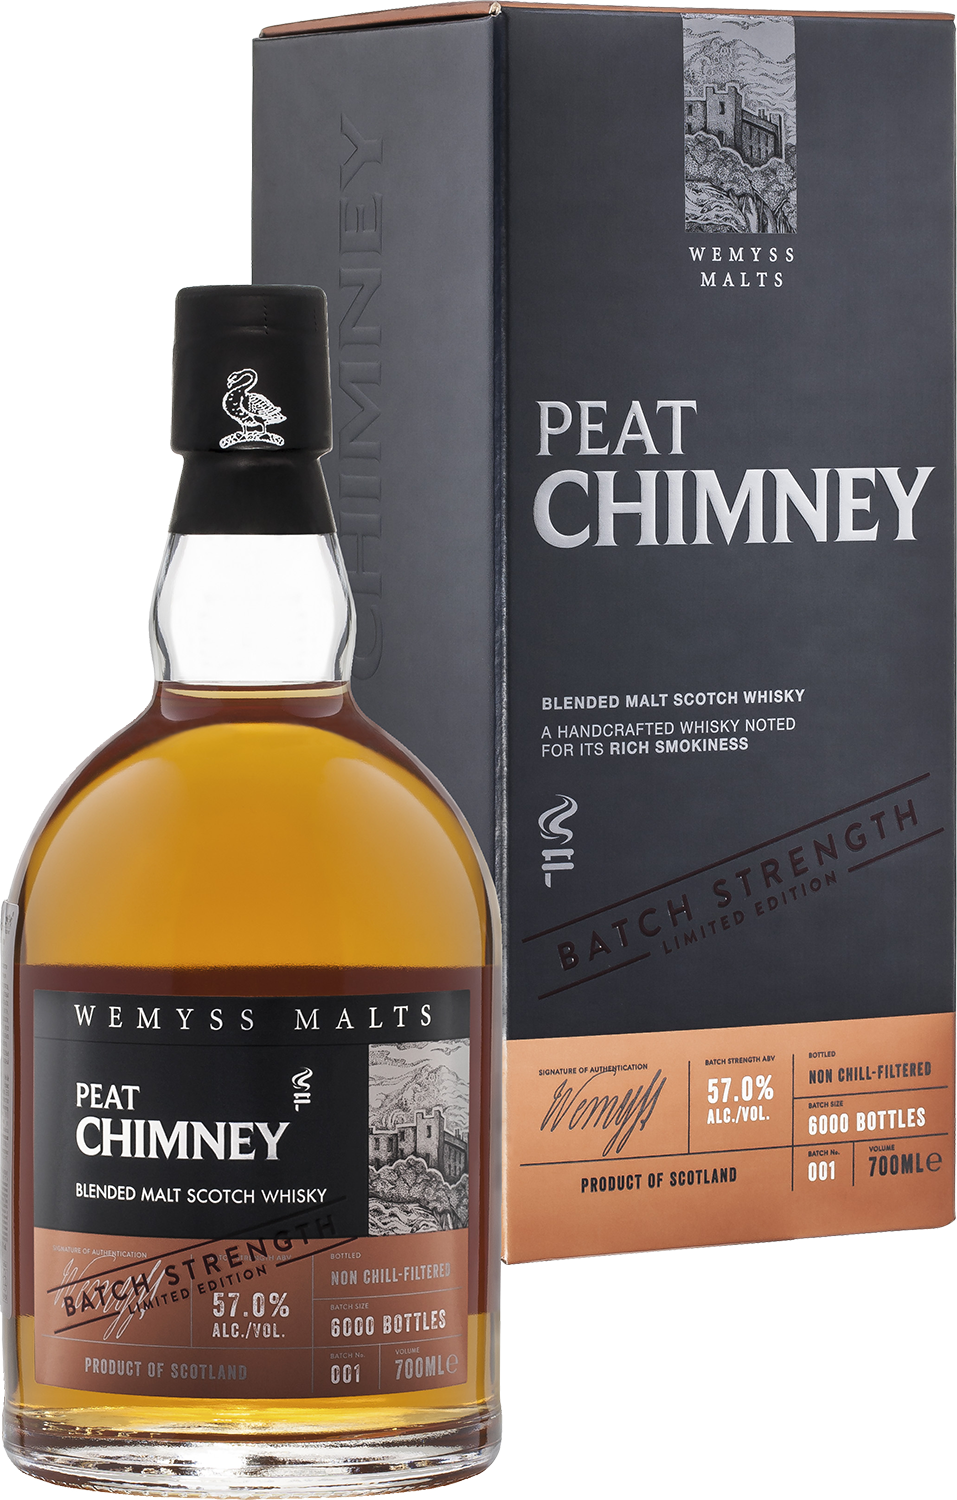 Peat Chimney Batch Strength Wemyss Malts blended malt scotch whisky wemyss malts peat chimney batch strength blended malt scotch whisky gift box